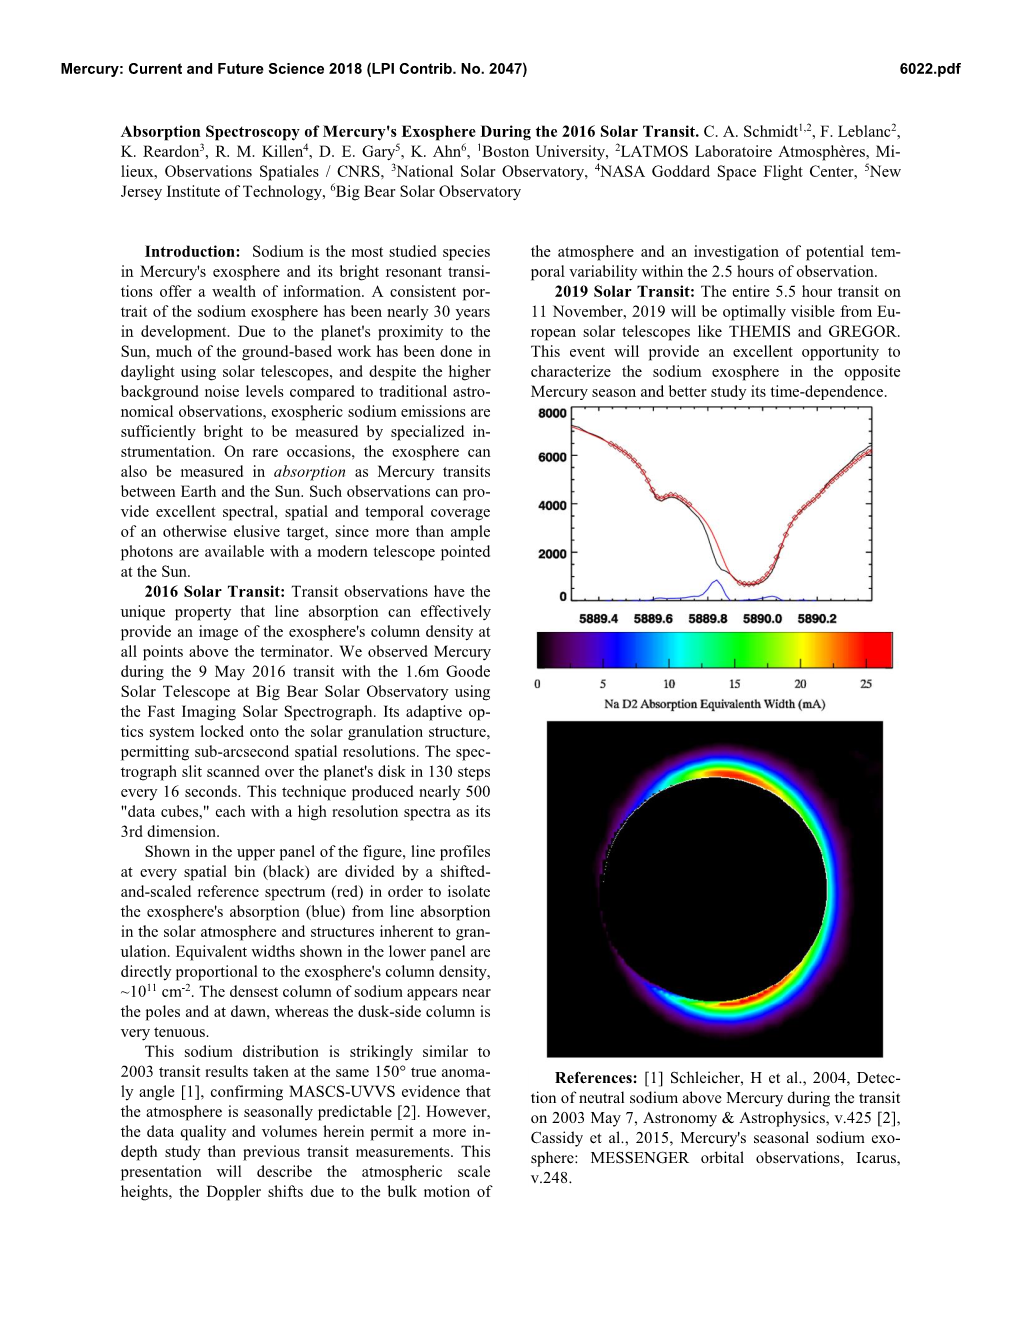 Absorption Spectroscopy of Mercury's Exosphere During the 2016 Solar Transit